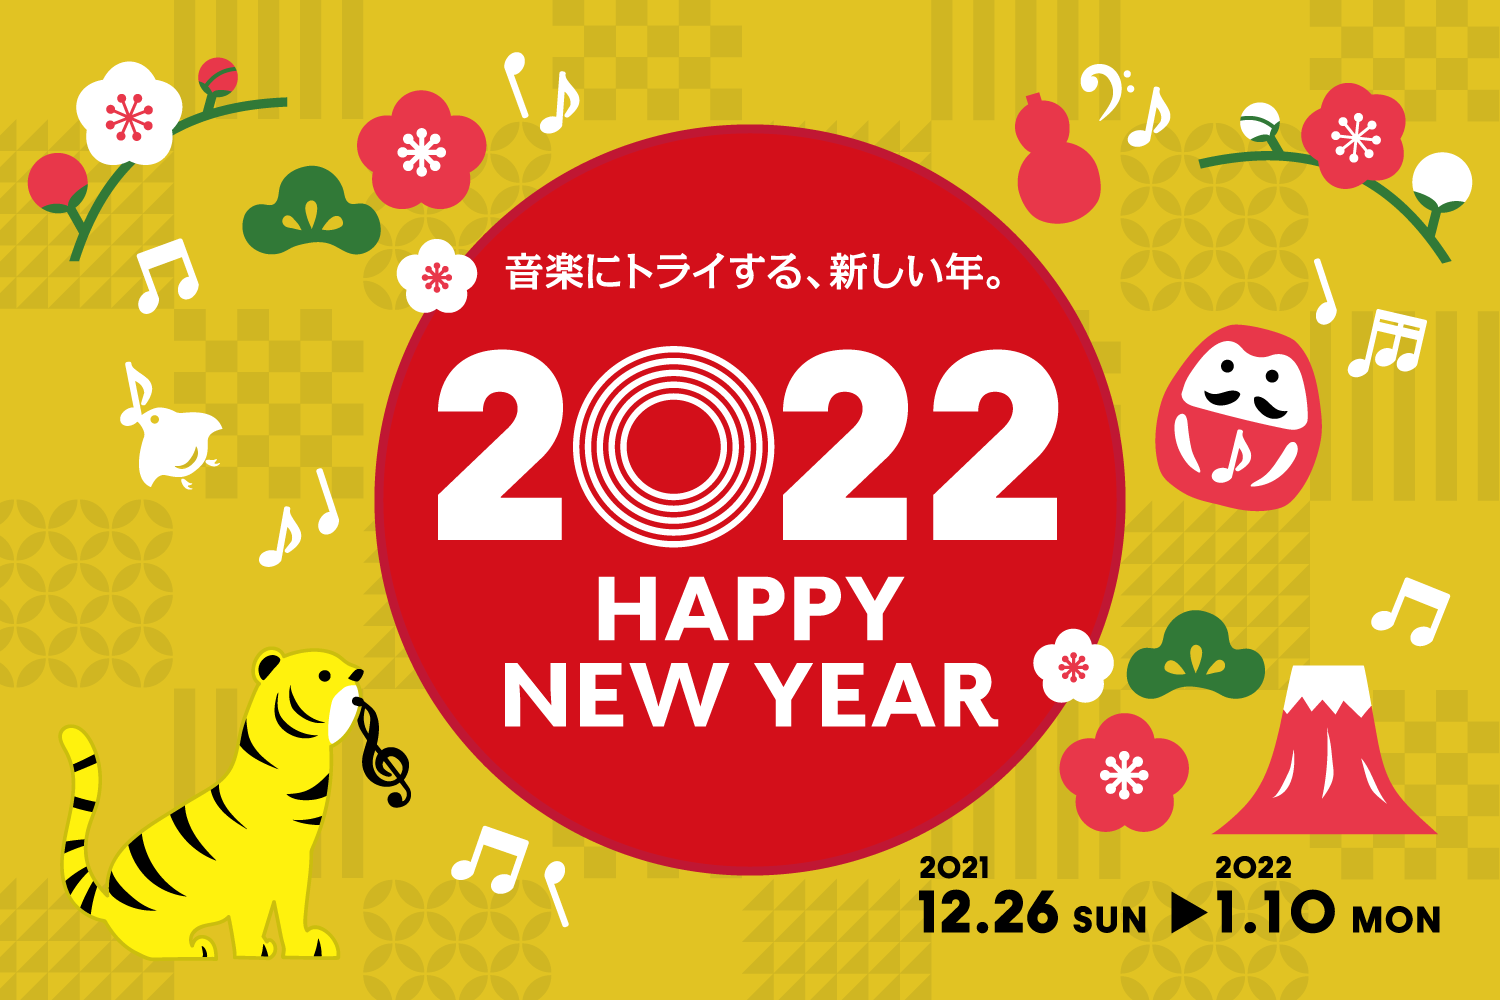 【HAPPY NEW YEAR 2022】お買い得情報 「ギター・ベース・ウクレレ編」